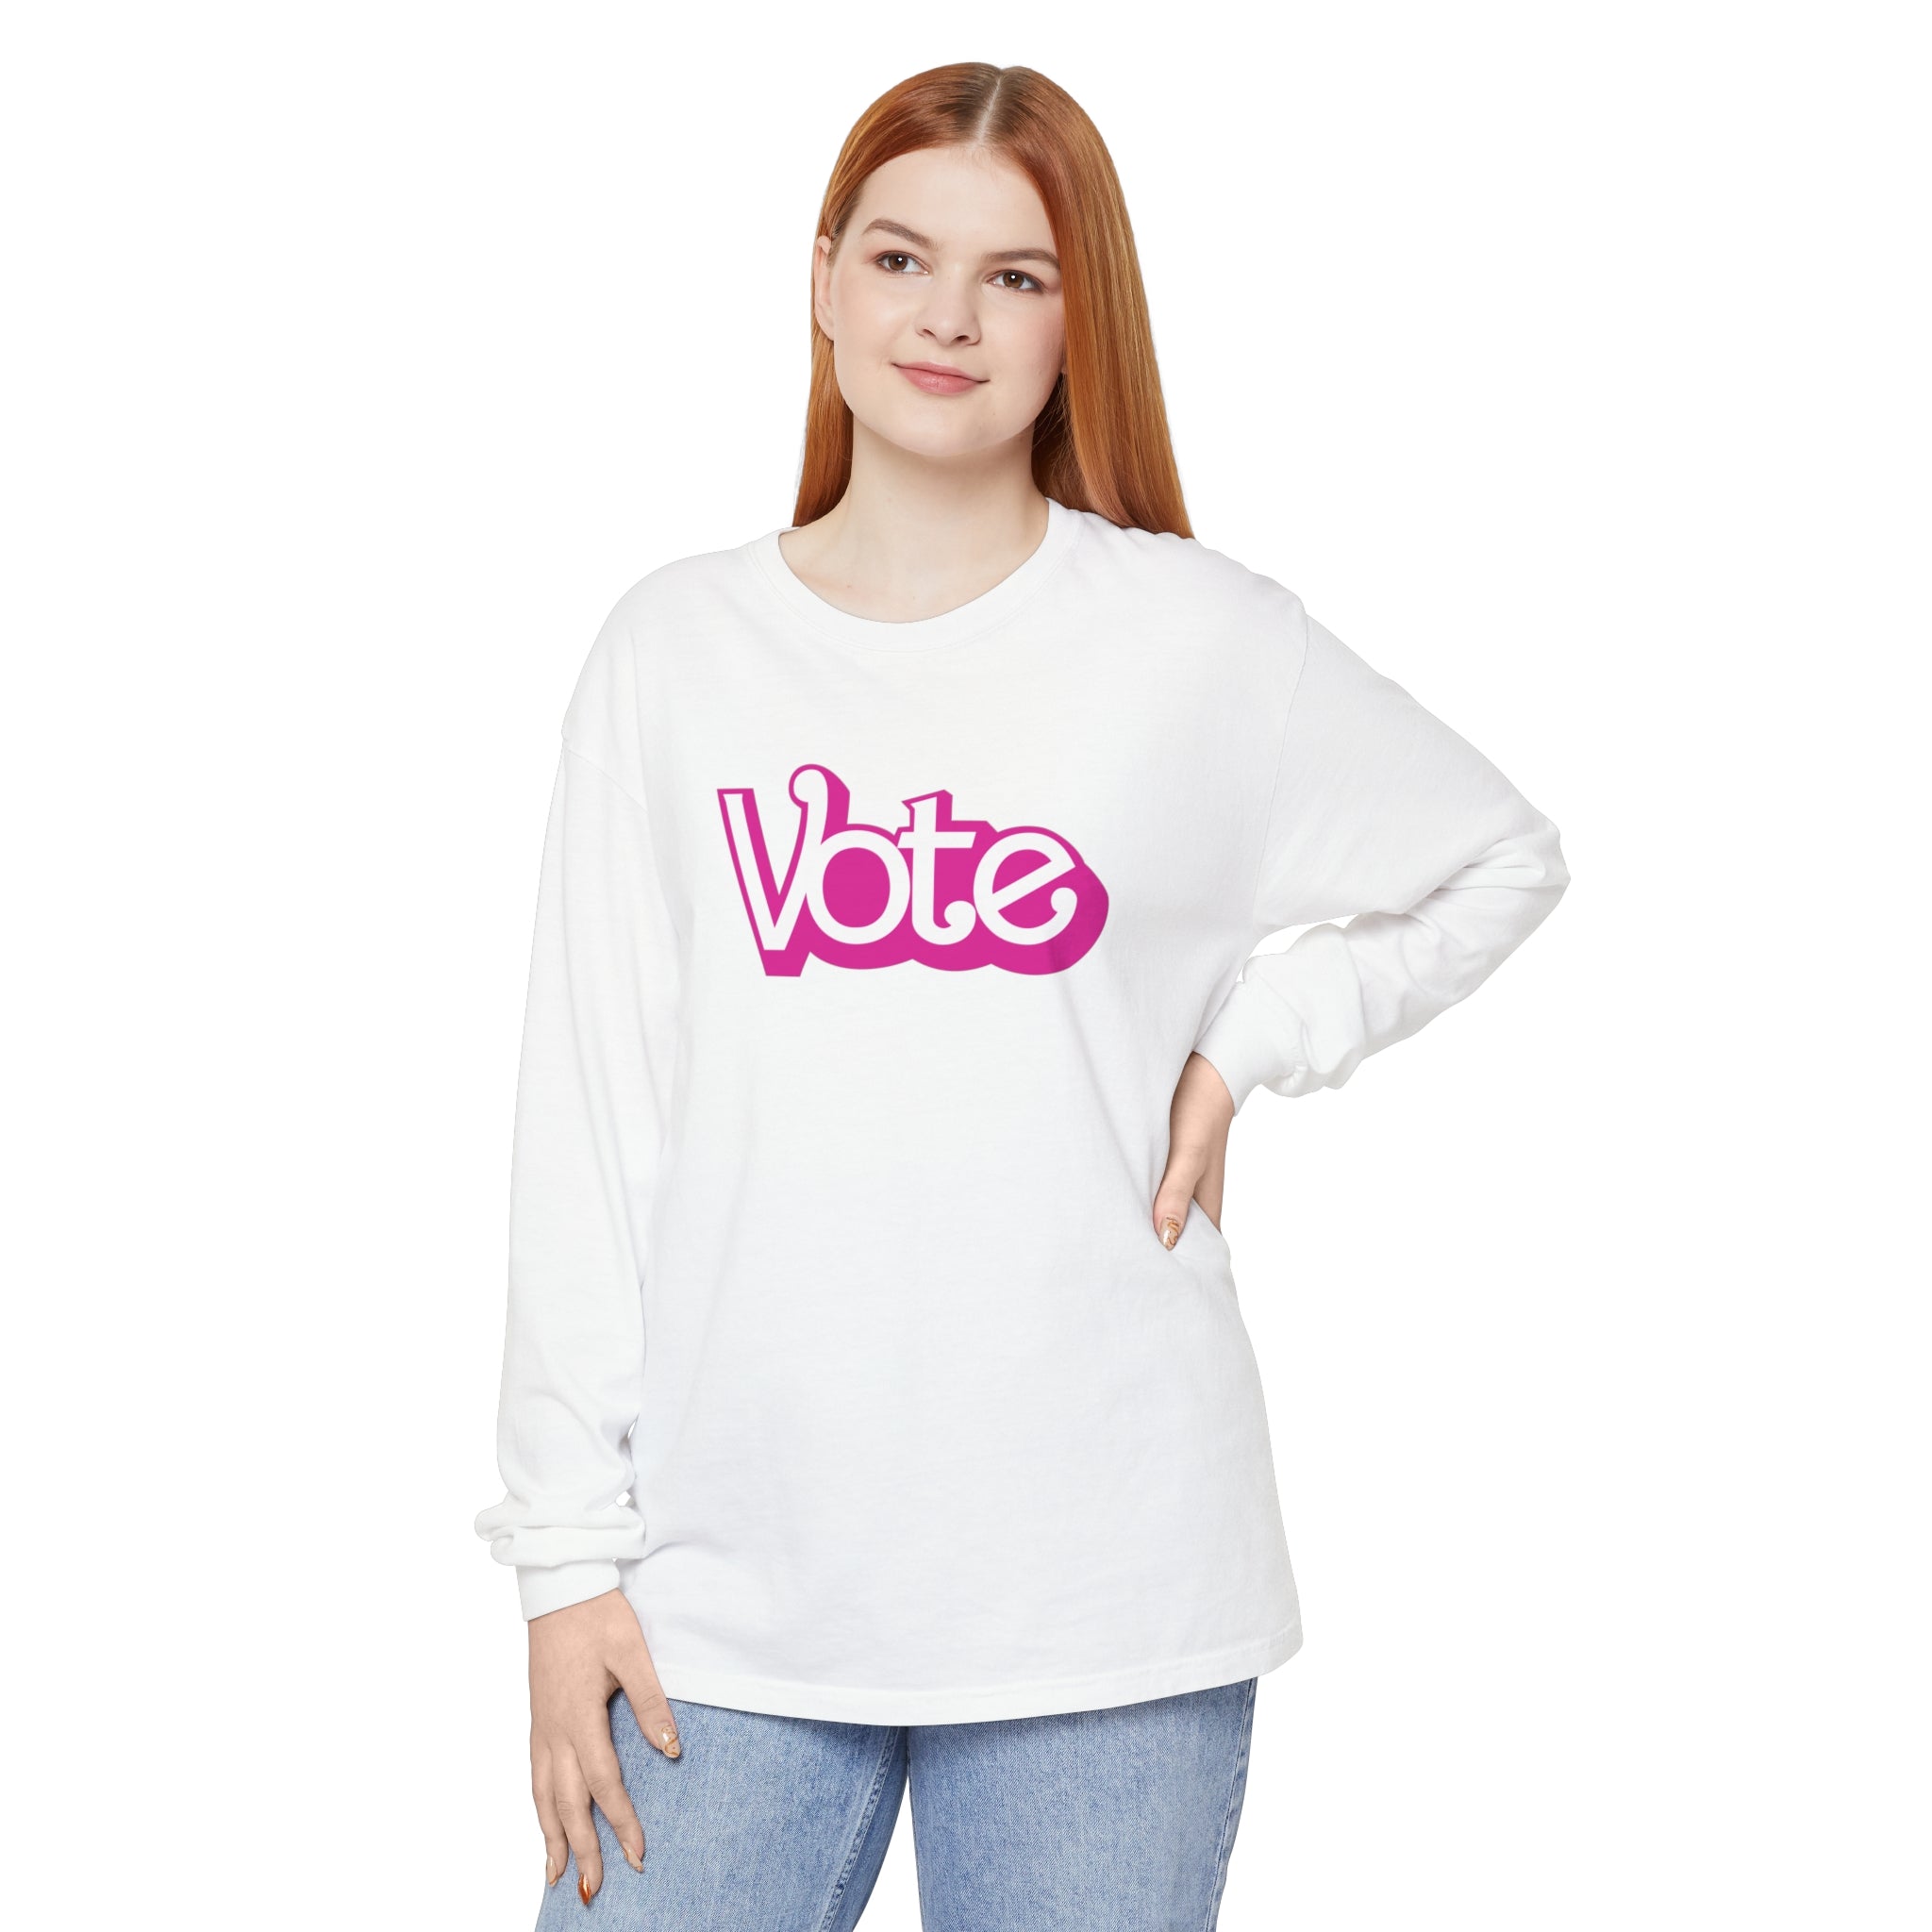 VOTE PINK Unisex  Long Sleeve T-Shirt